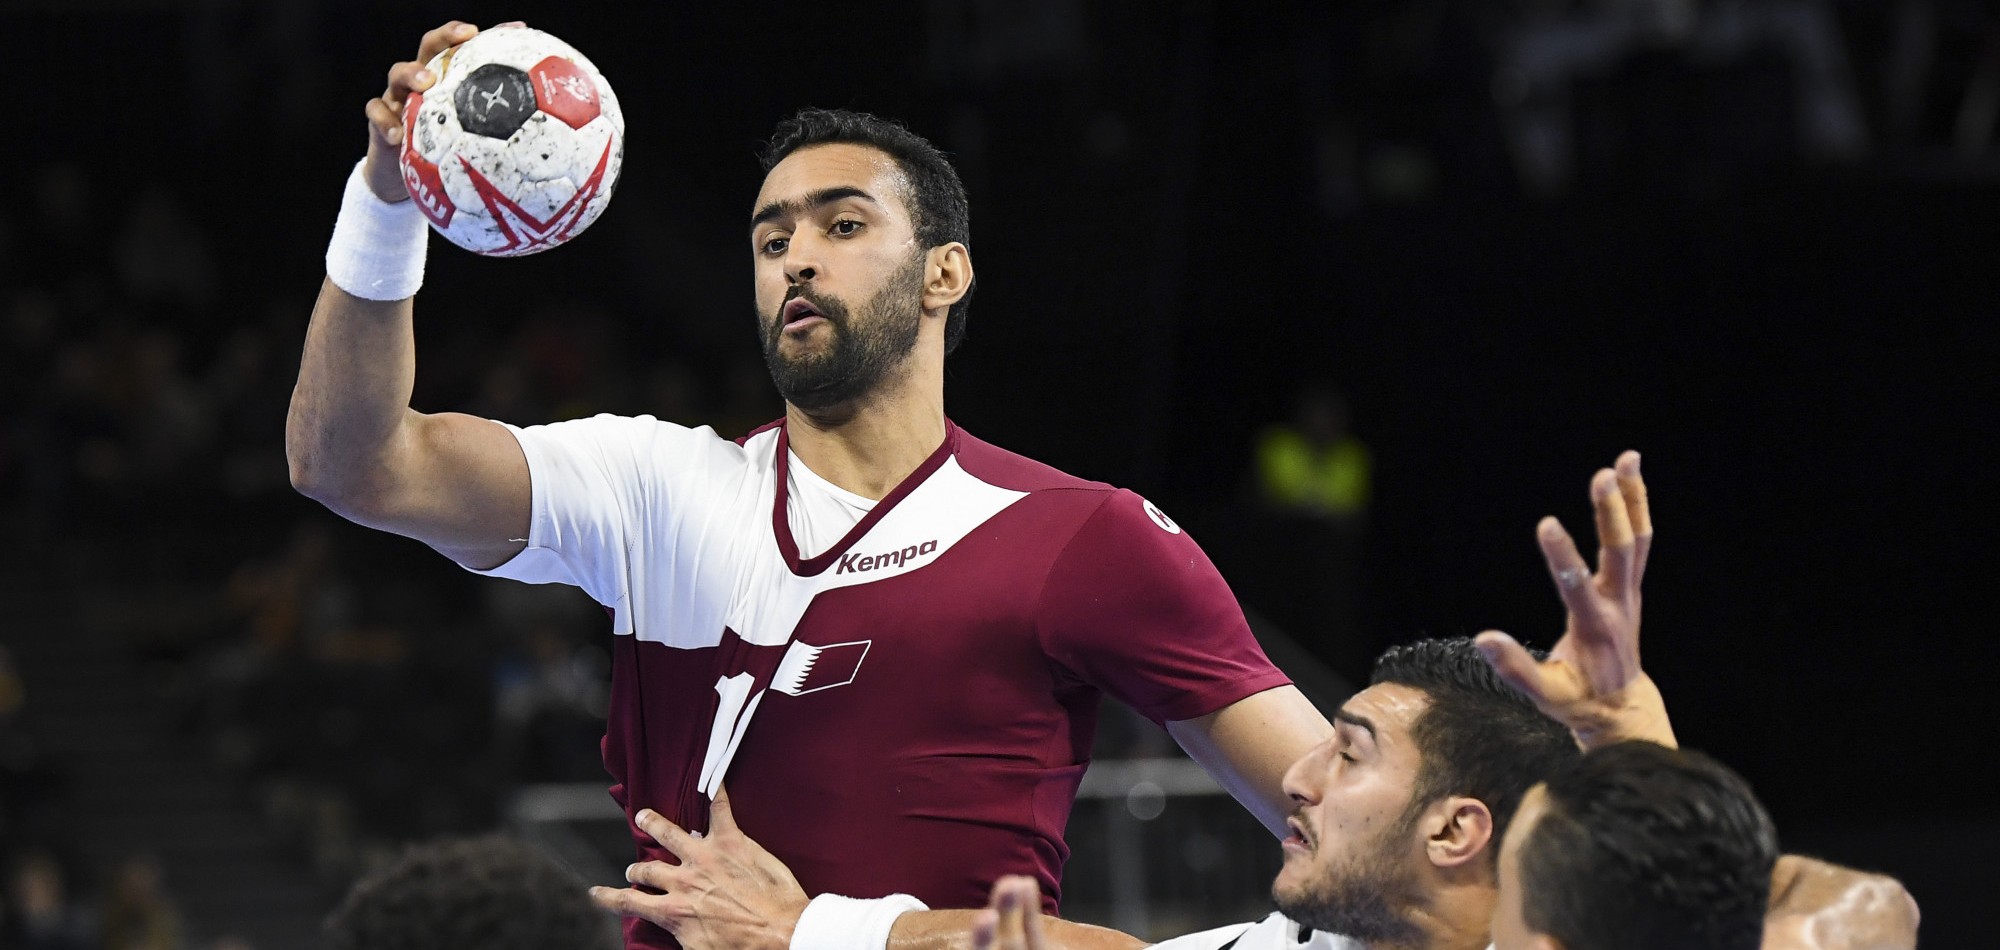 Handball: Qatar ready for ‘tough battles’ at World Championship